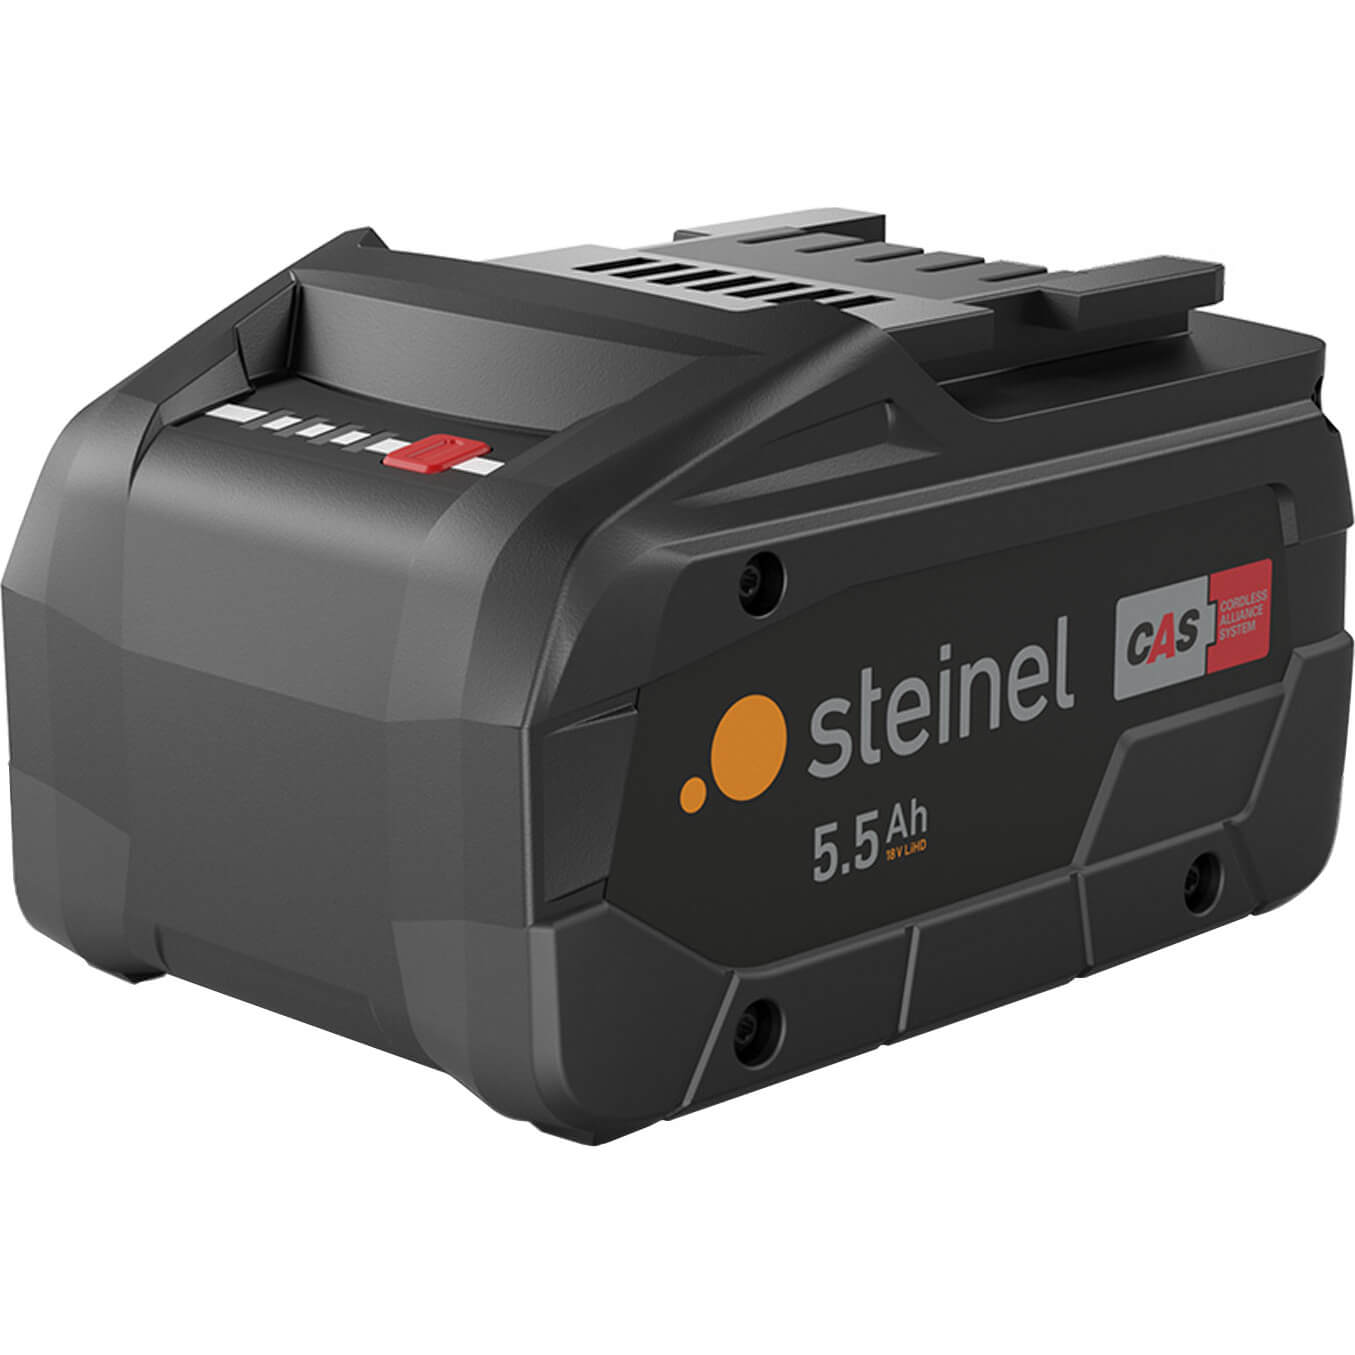 Image of Steinel 18v CAS LiHD Cordless Li-Ion Battery 5.5ah 5.5ah